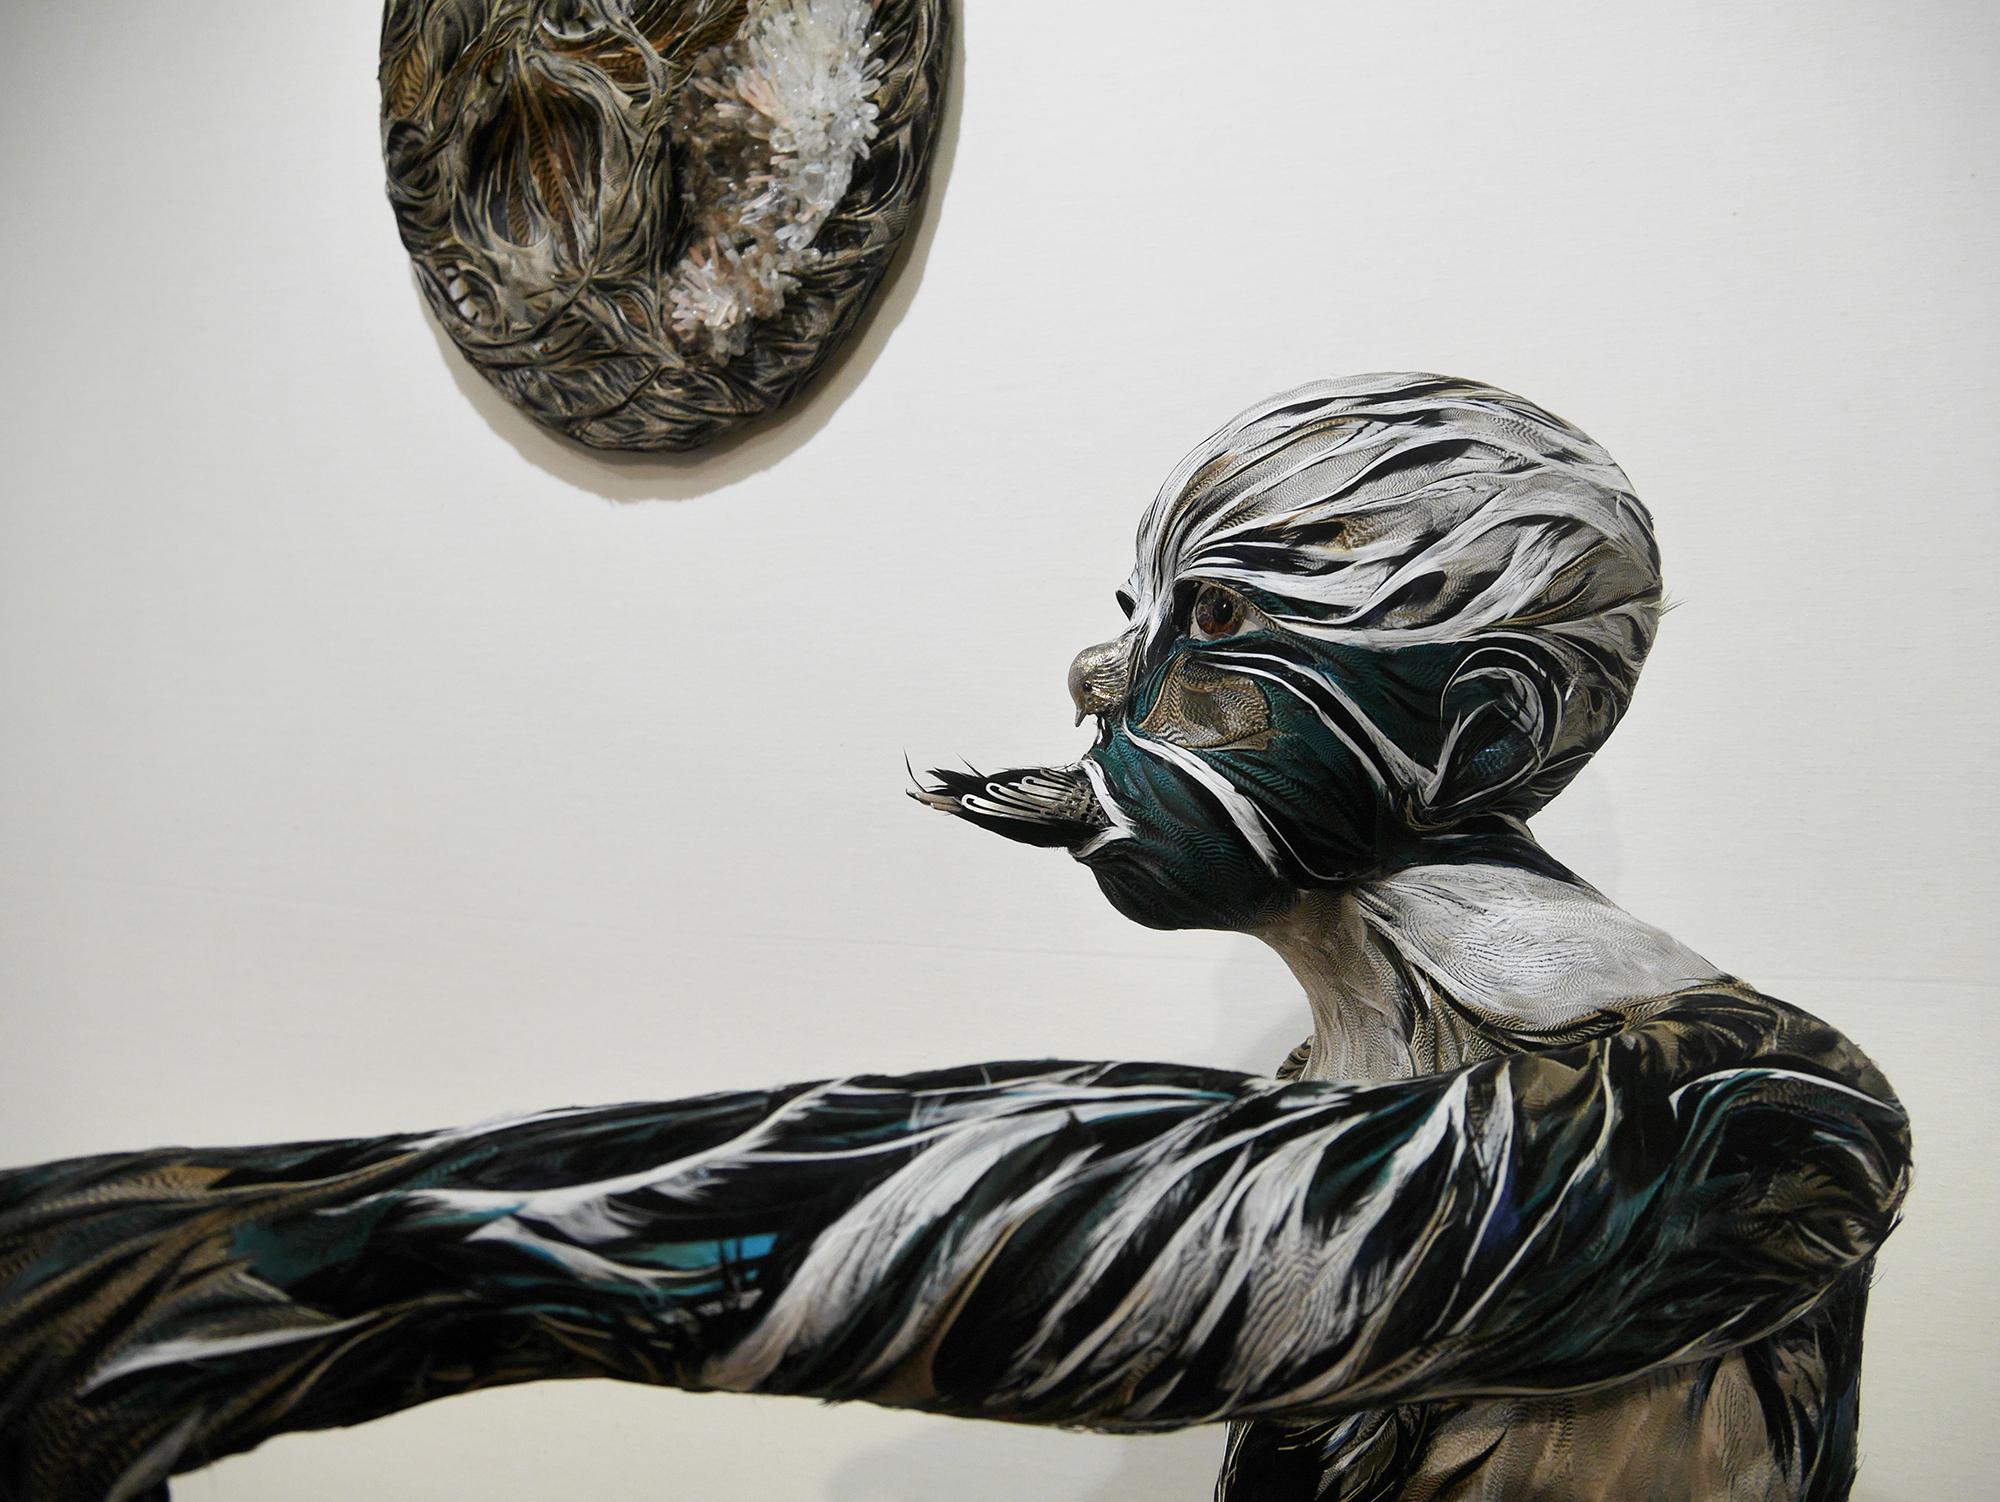 Thémis figurative sculpture, child, fairy tale, feathers by Laurence Le Constant For Sale 12